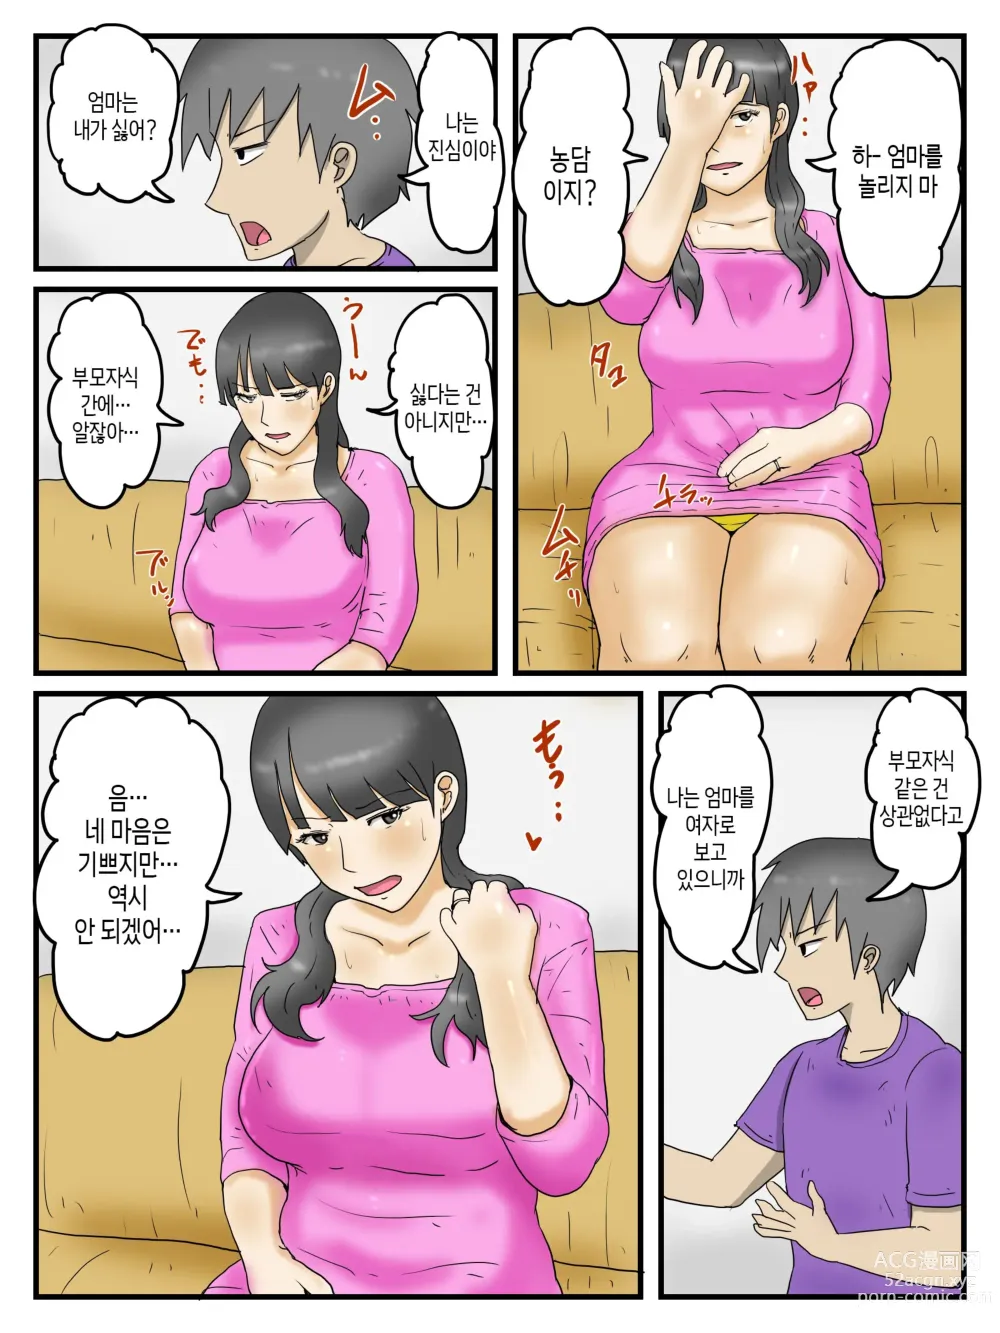 Page 6 of doujinshi 엄마에게 부탁했더니 비교적 쉽게 하게 해 주었다